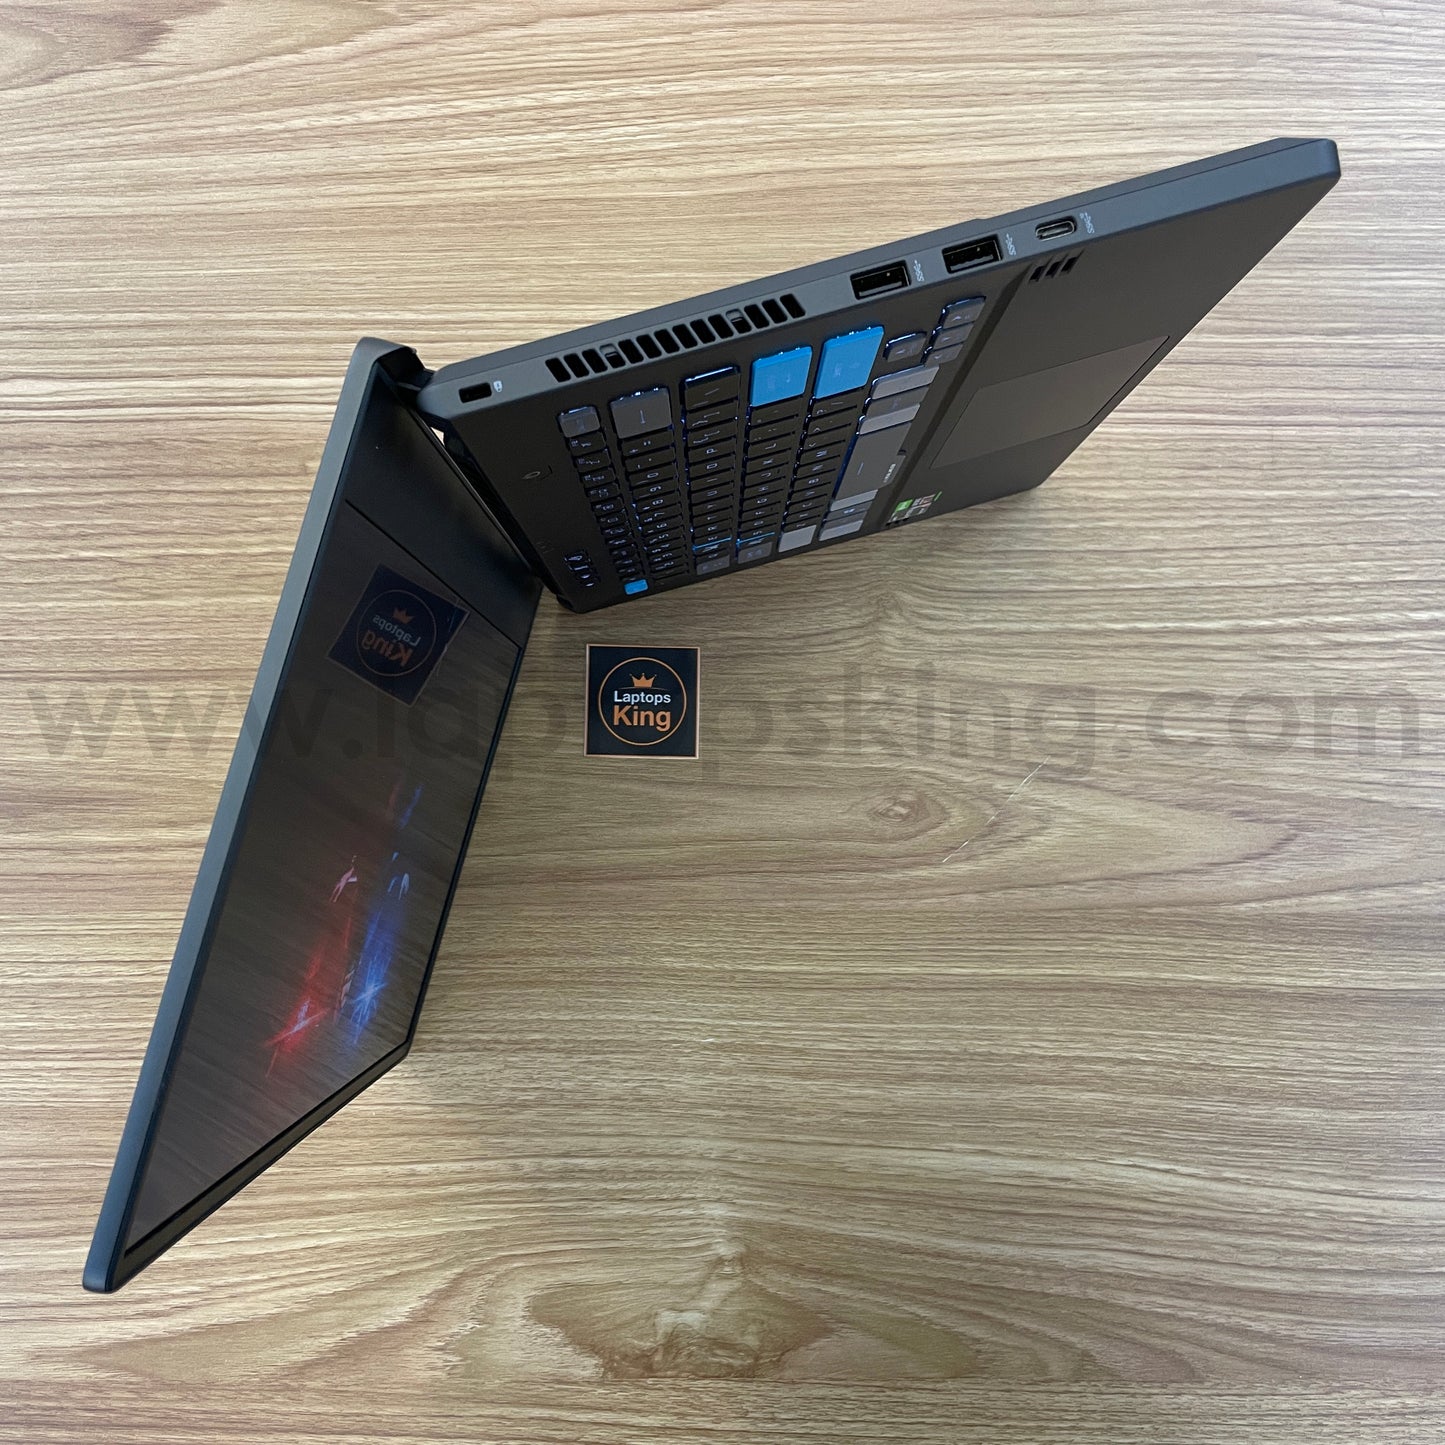 Asus Rog Zephyrus G14 GA401QEC Ryzen 9 5900hs Rtx 3050 Ti 2K 120hz Gaming Laptop (New Open Box)